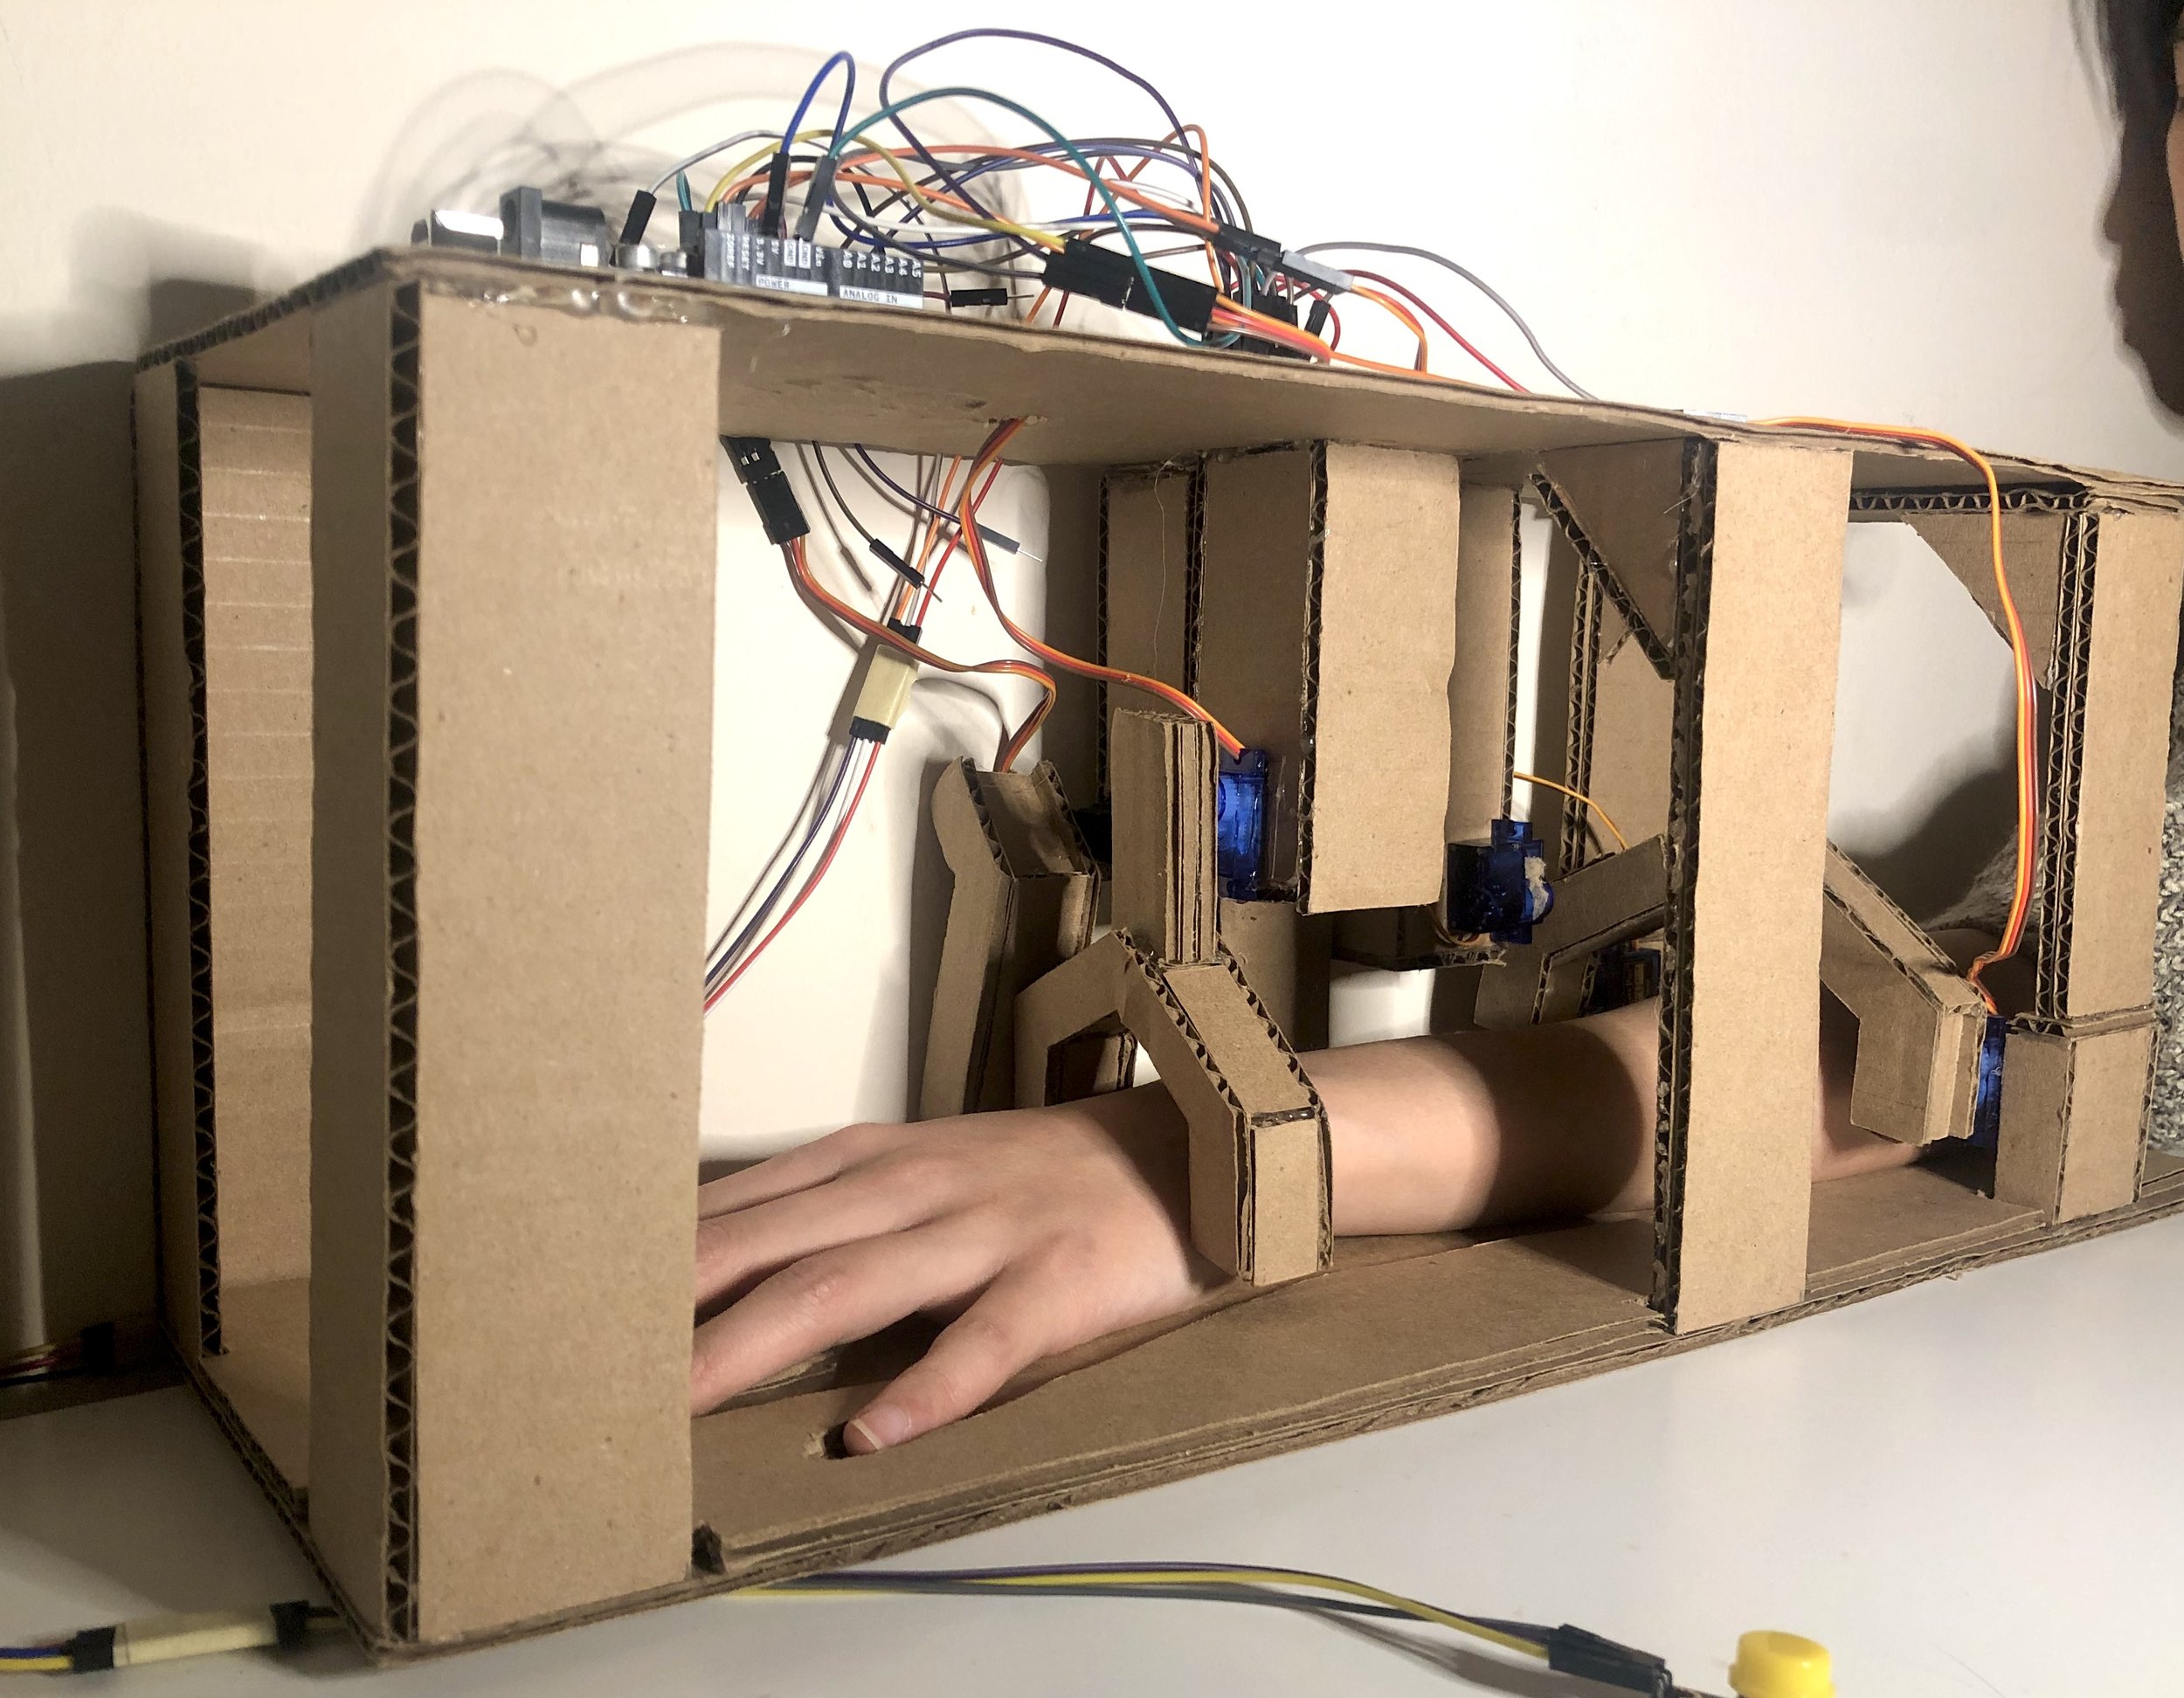 1.0 Cardboard Testing Device